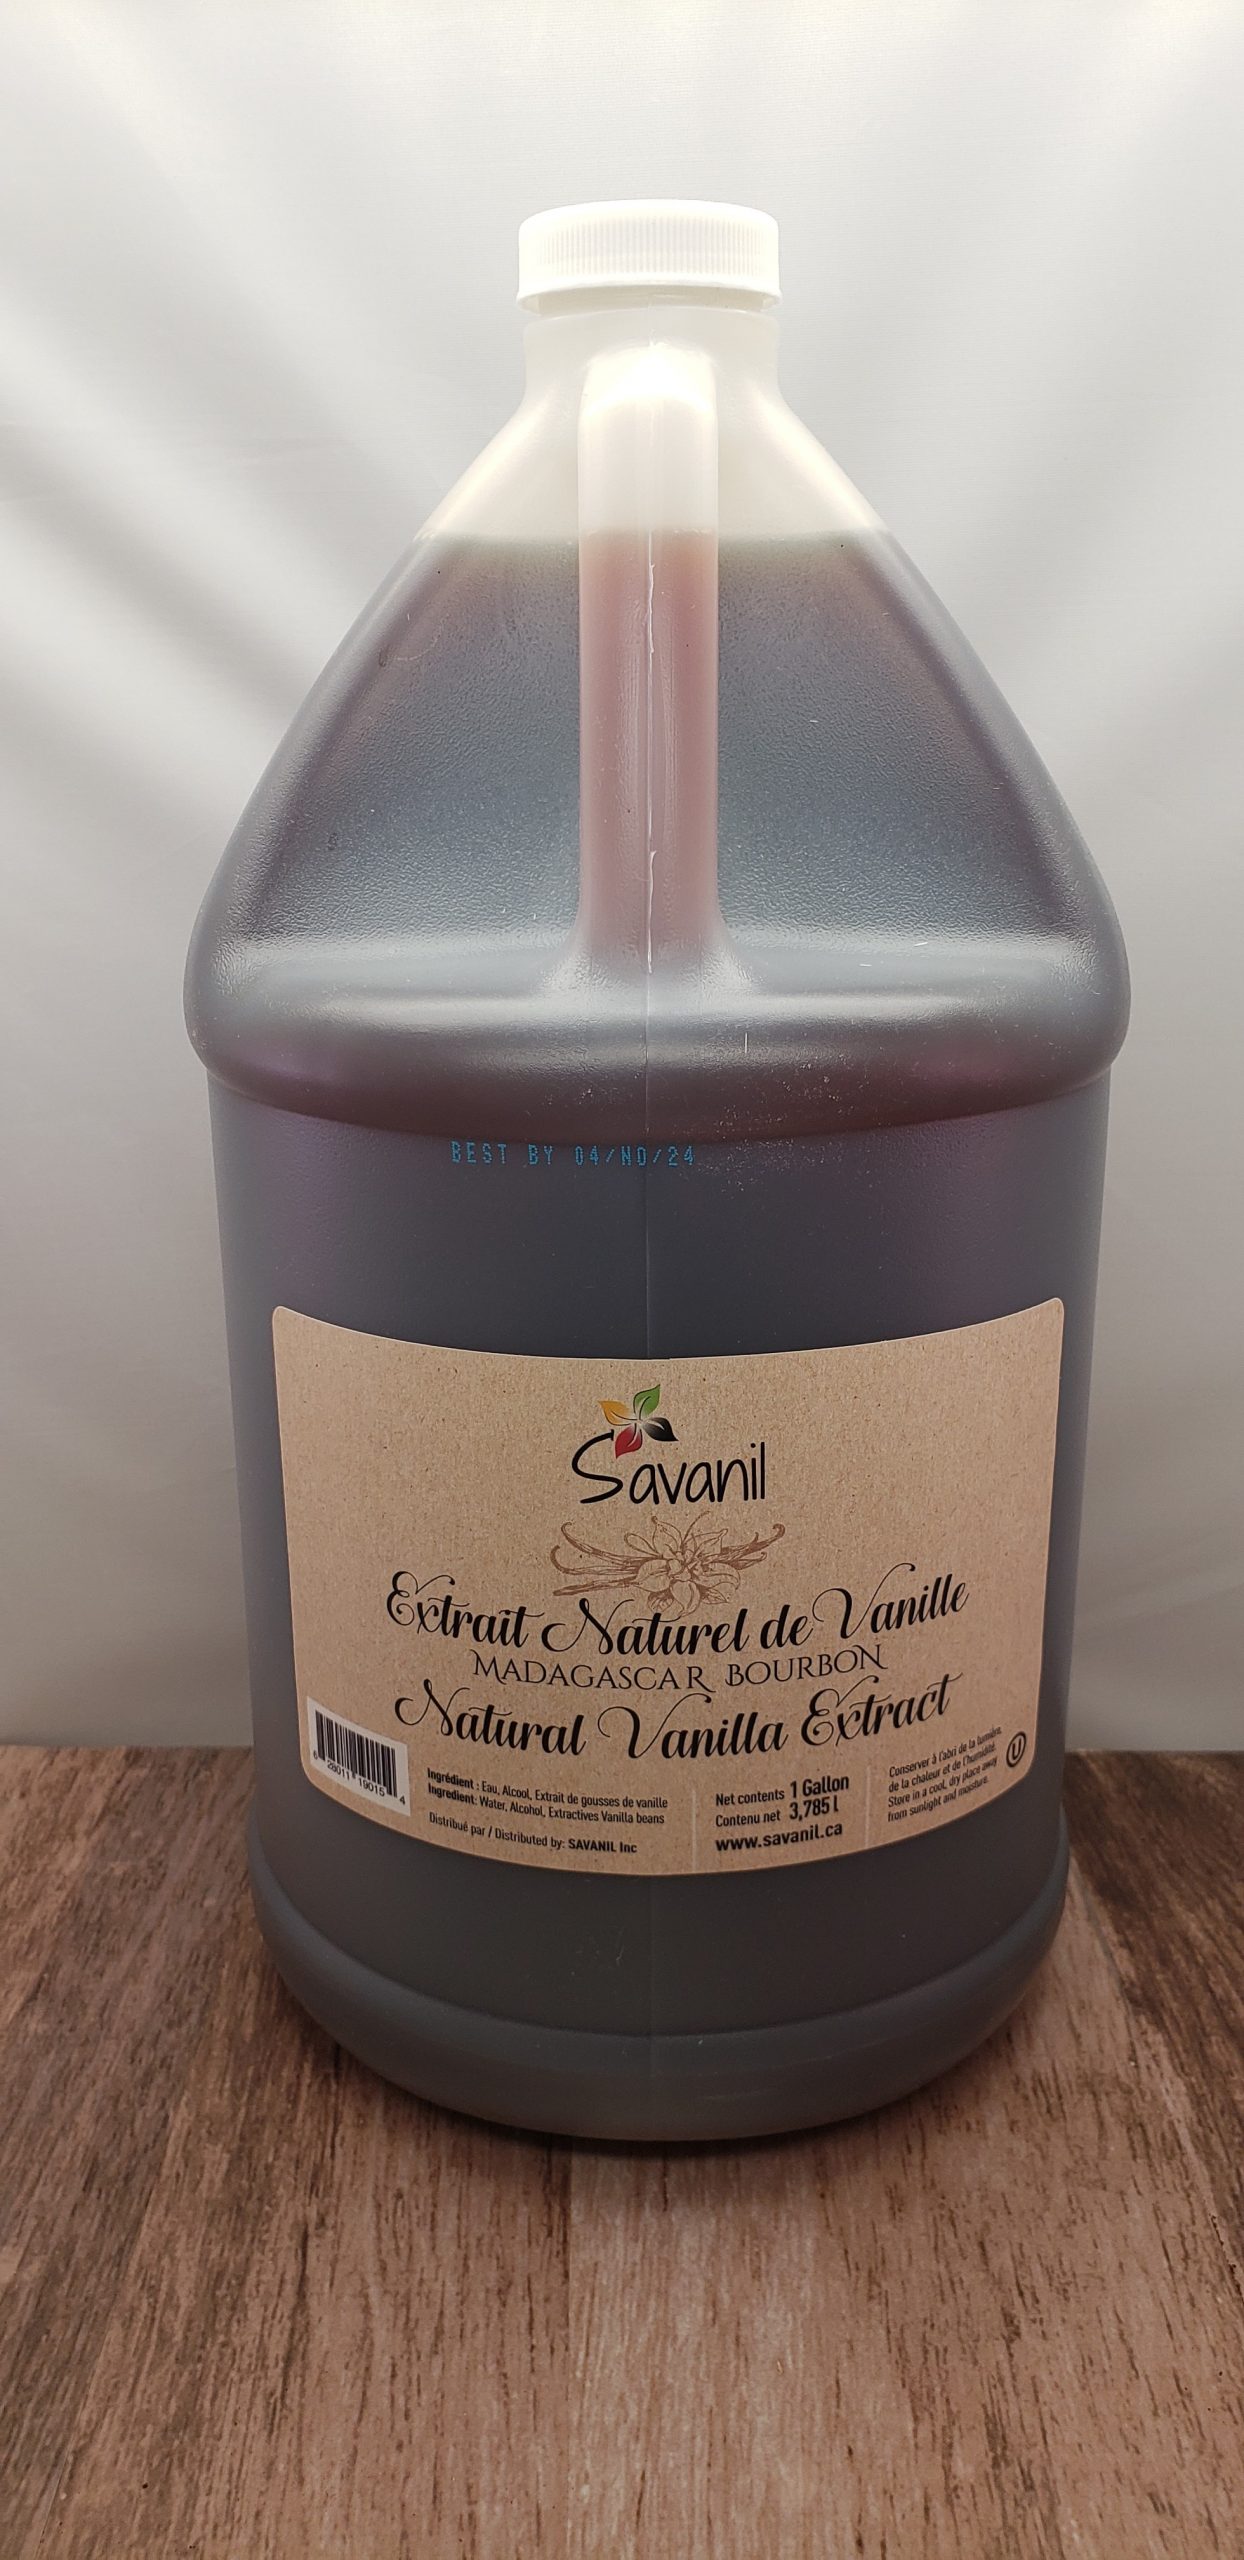 Bourbon vanilla from Madagascar – Quai Sud